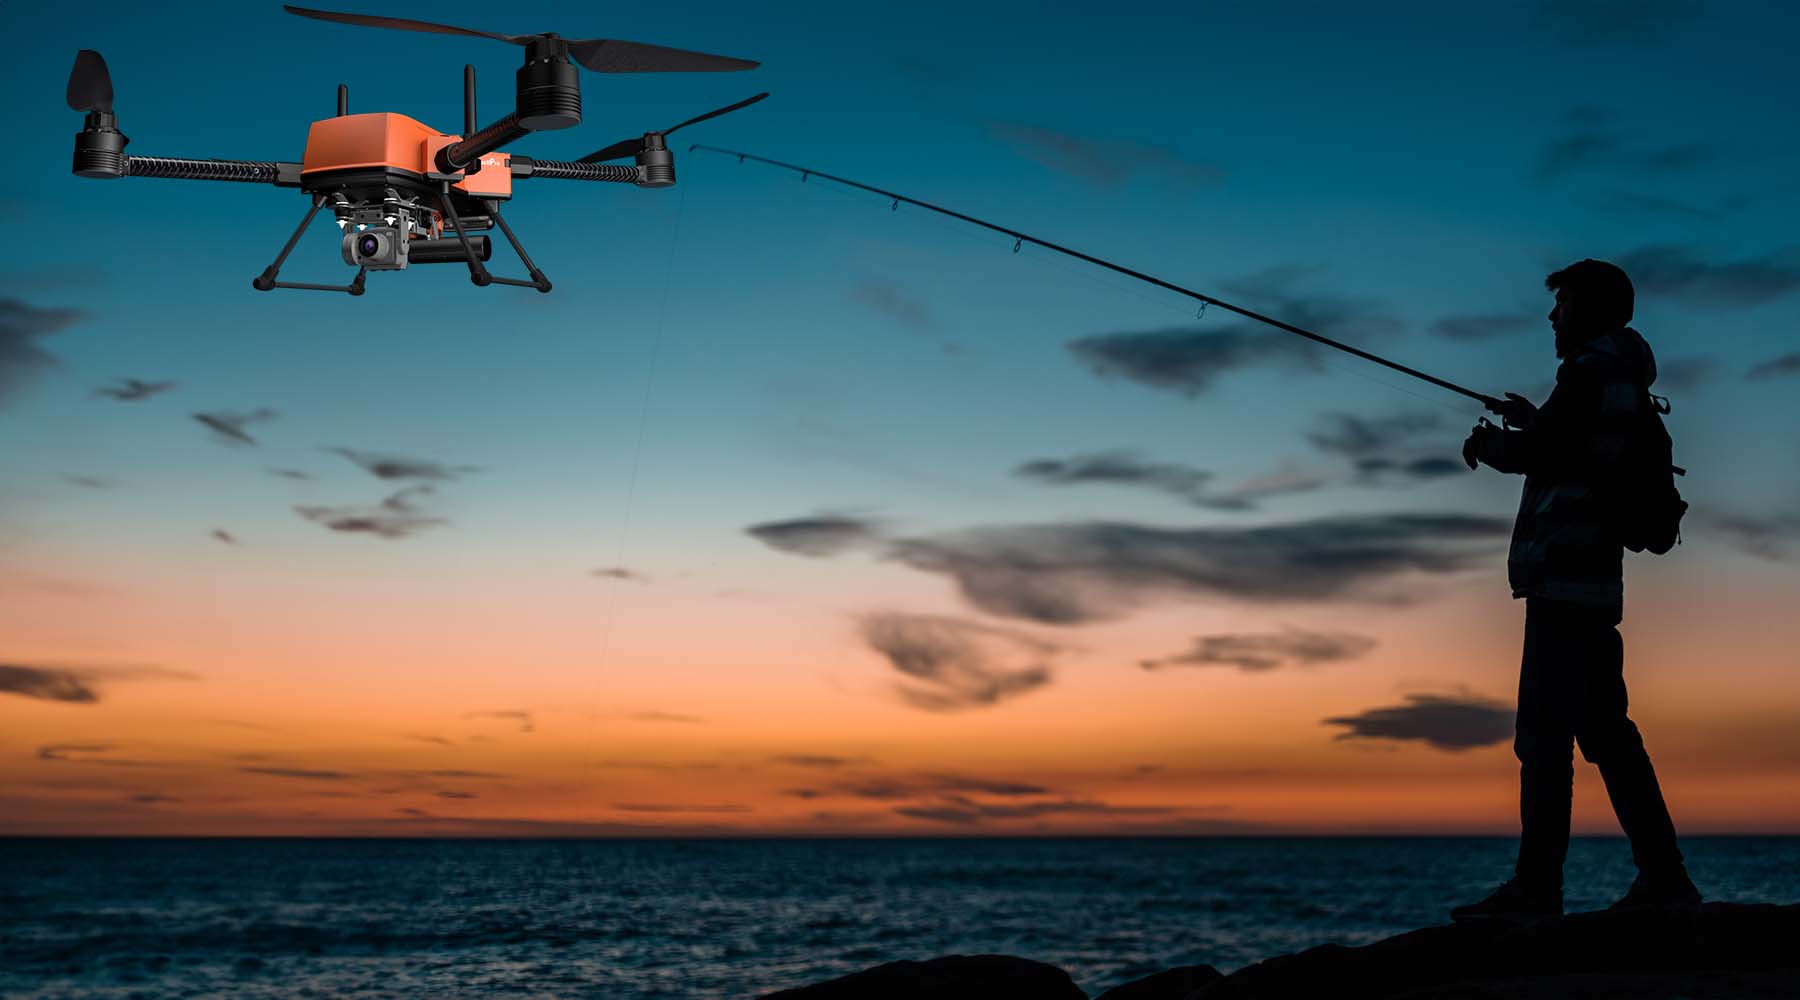 Waterproof Fishing Drones Swellpro and Chasing underwater Urban Drones